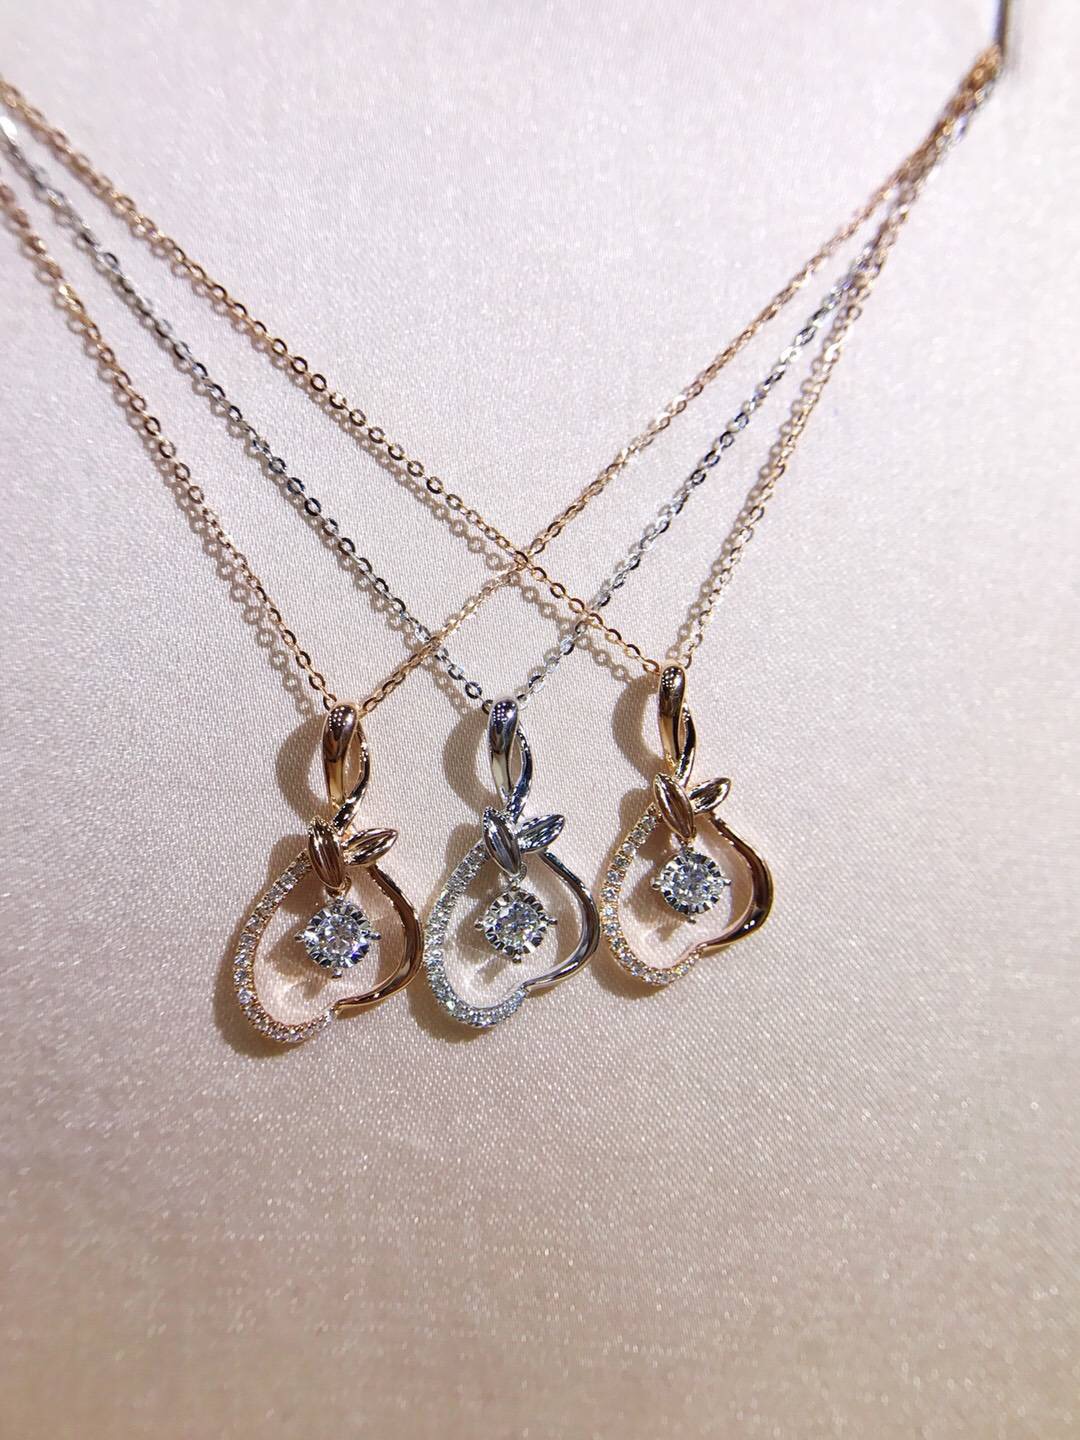 P00832 Diamond Necklace in 18k White Gold/18k Gold